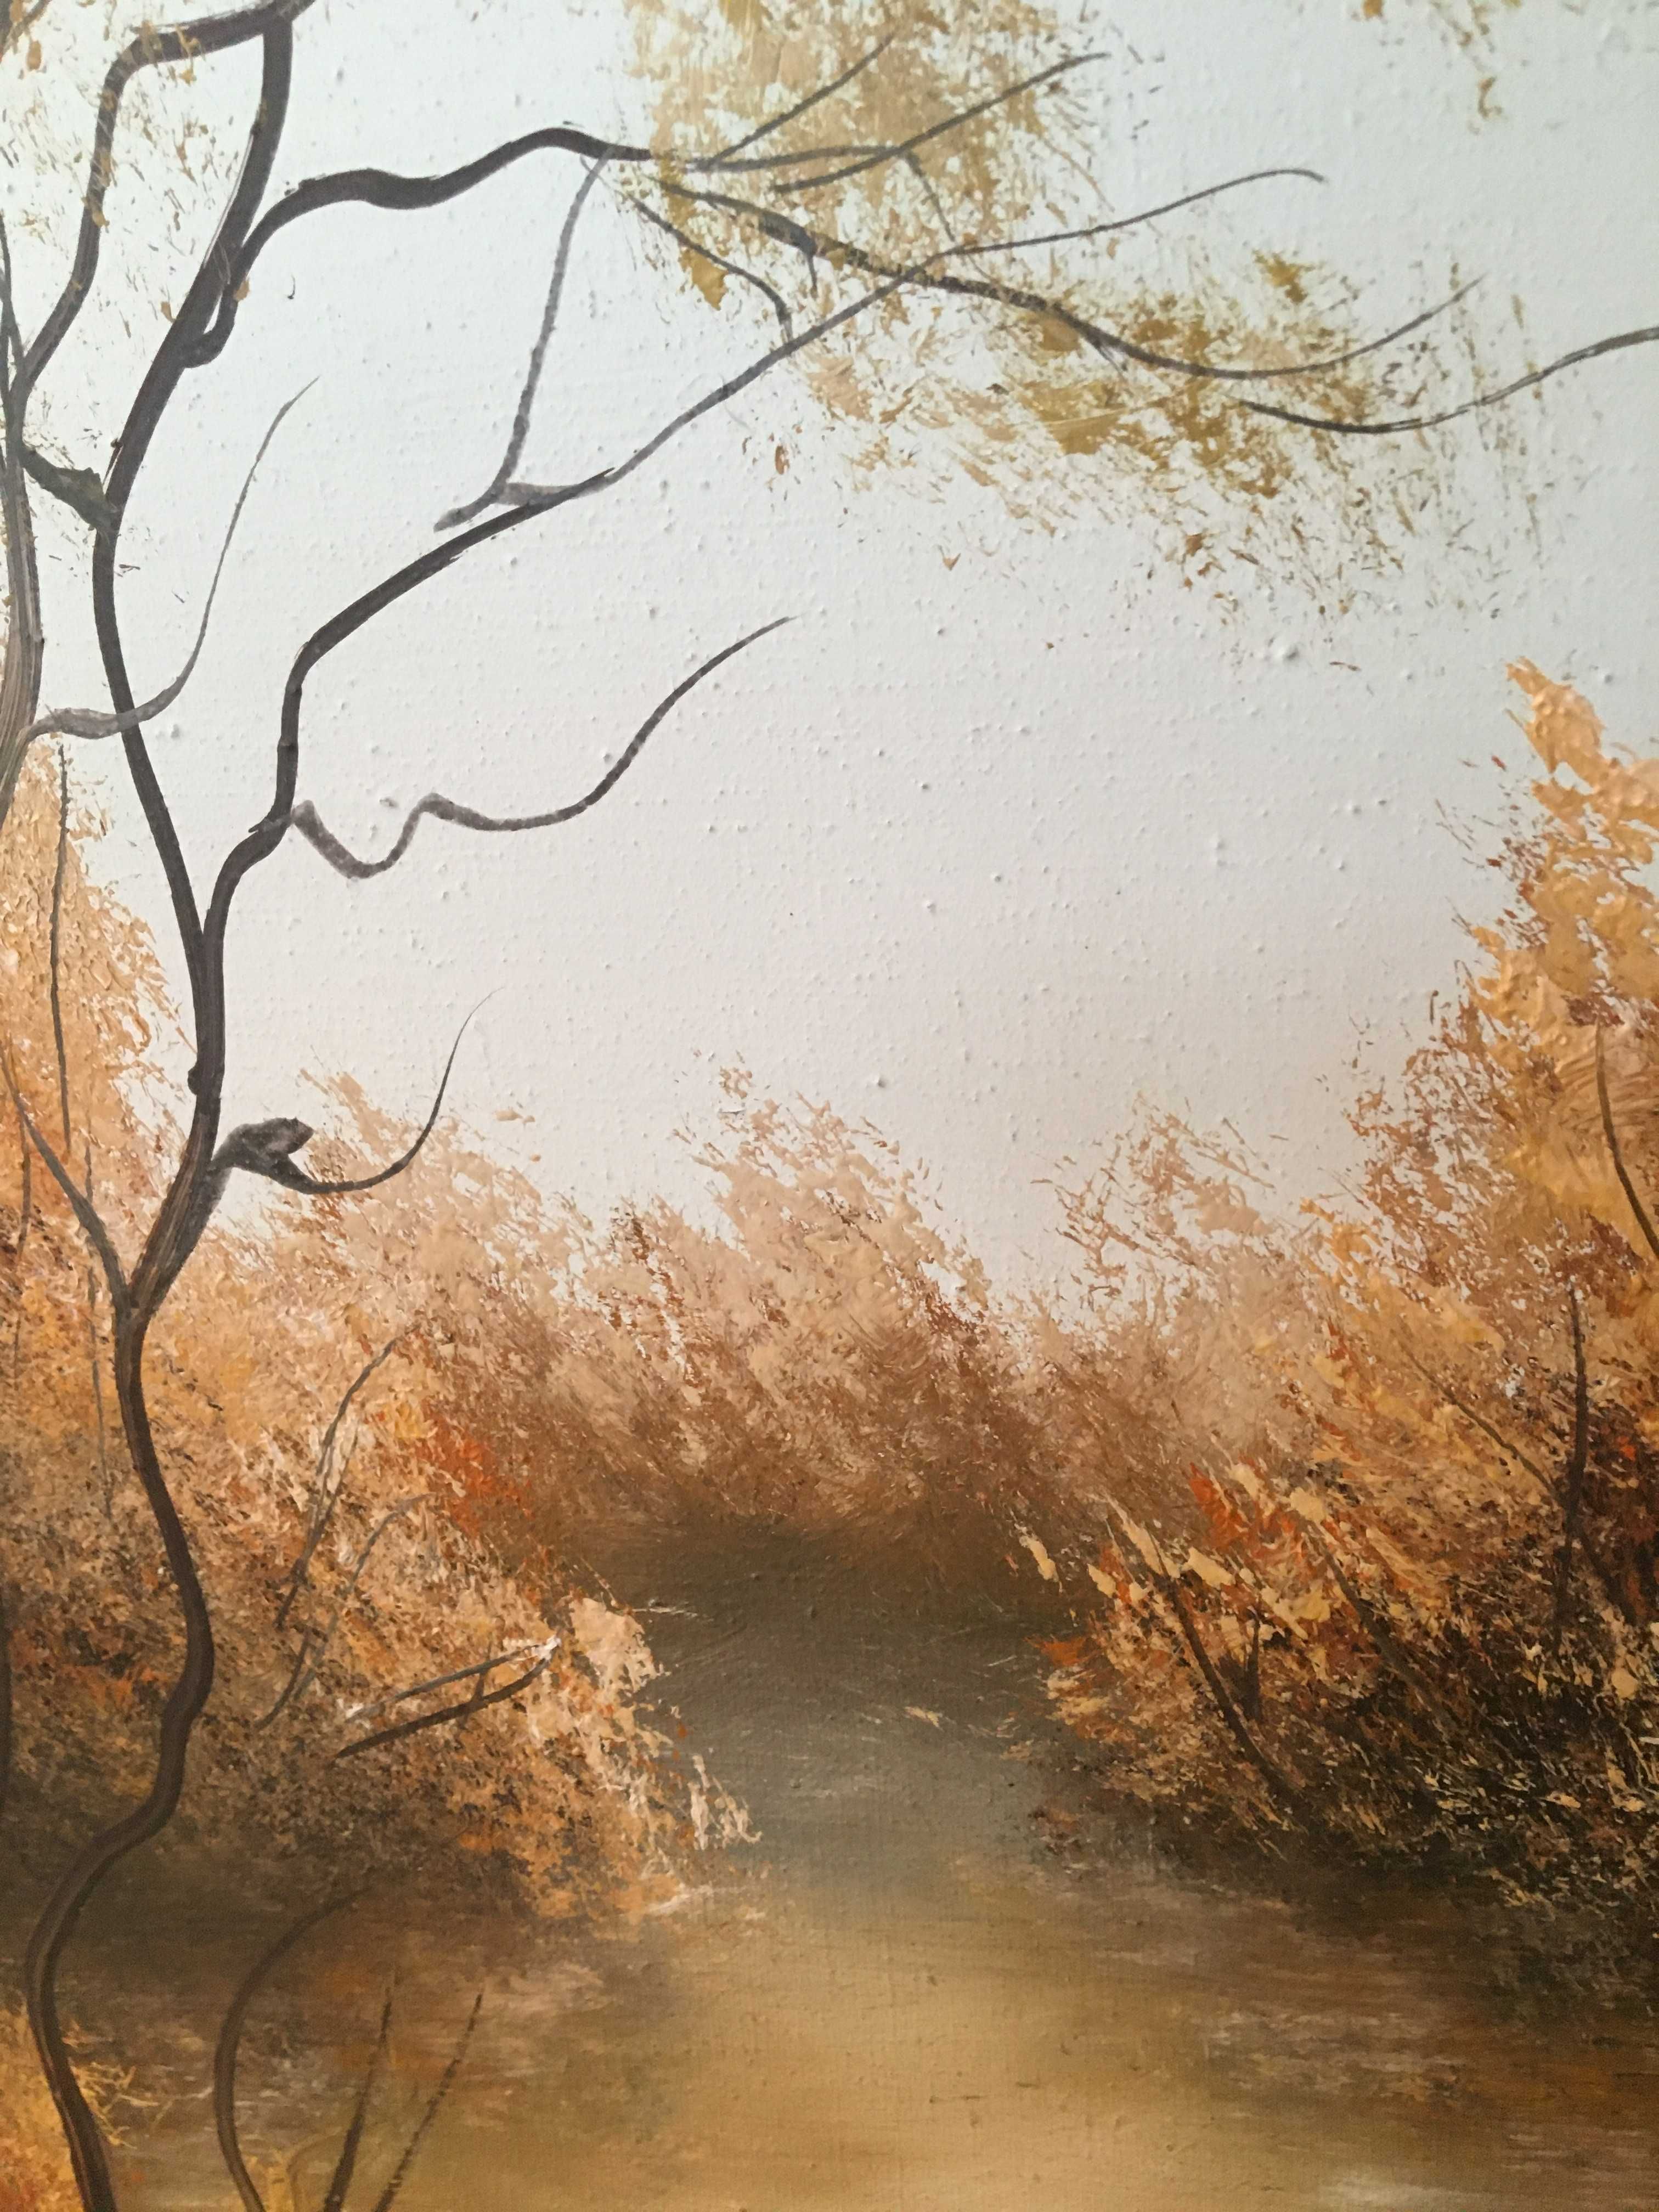 Jesienny pejzaż - obrazy olejne na płótnie - komplet